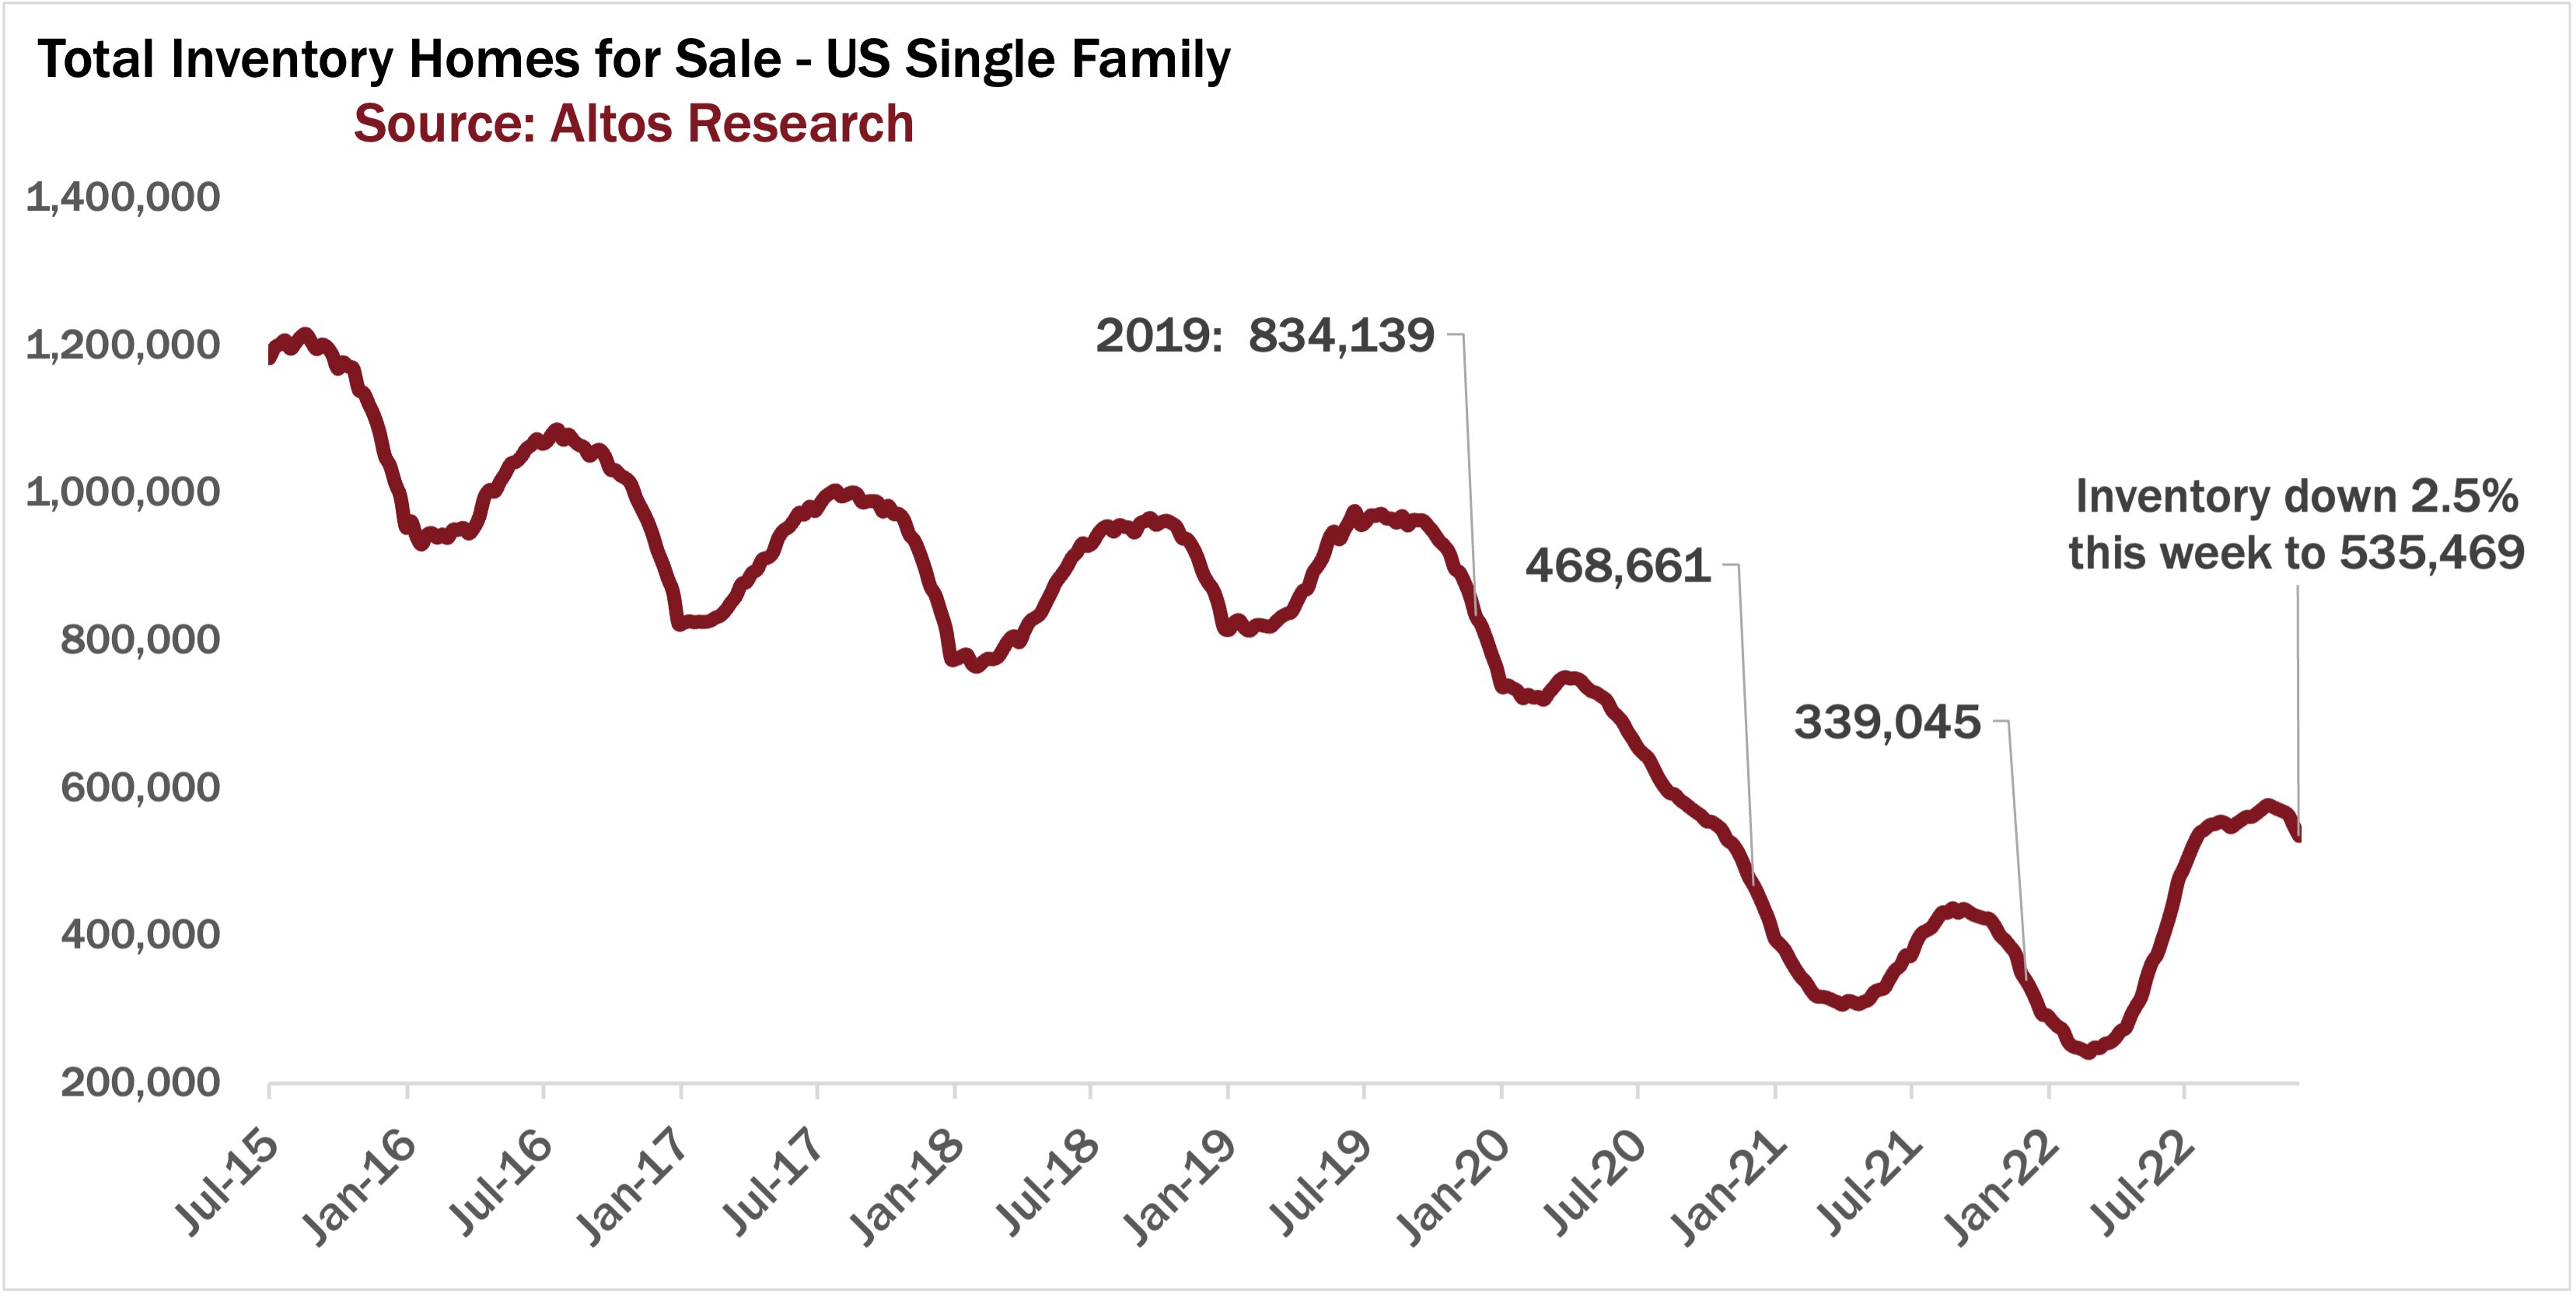 Latest U.S. single family home inventory